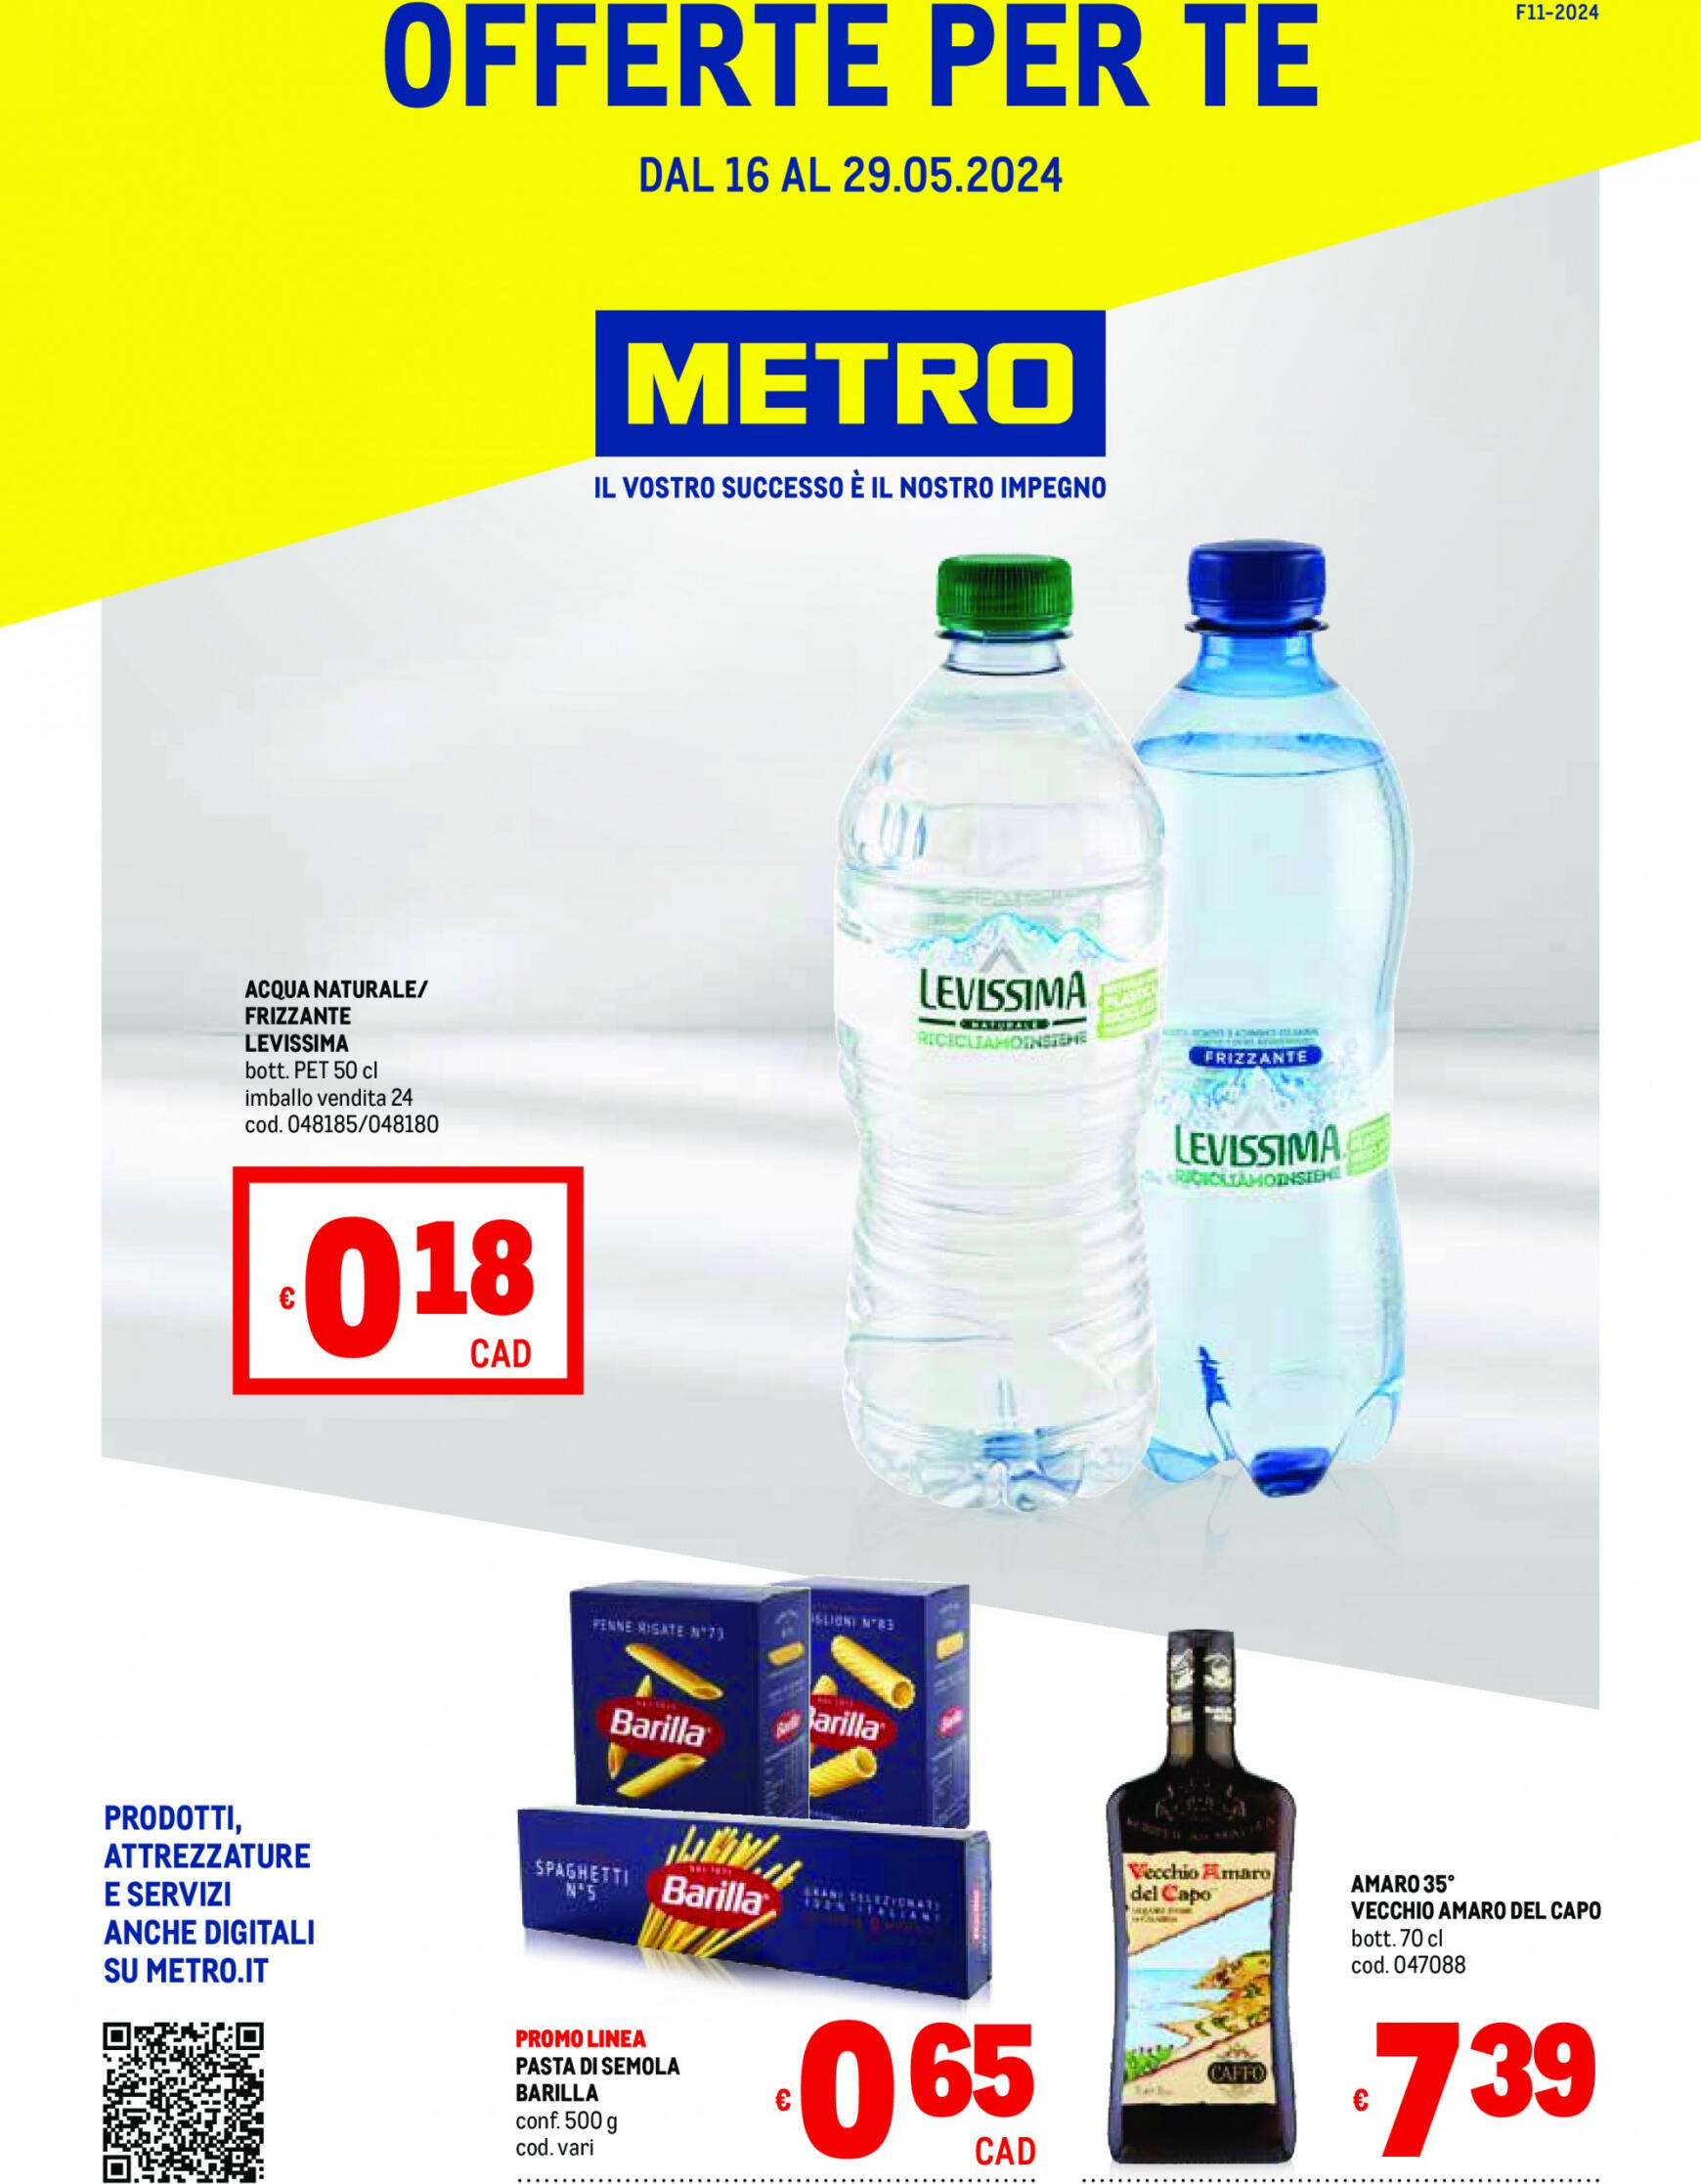 metro - Nuovo volantino Metro - Offerte per te 16.05. - 29.05. - page: 1